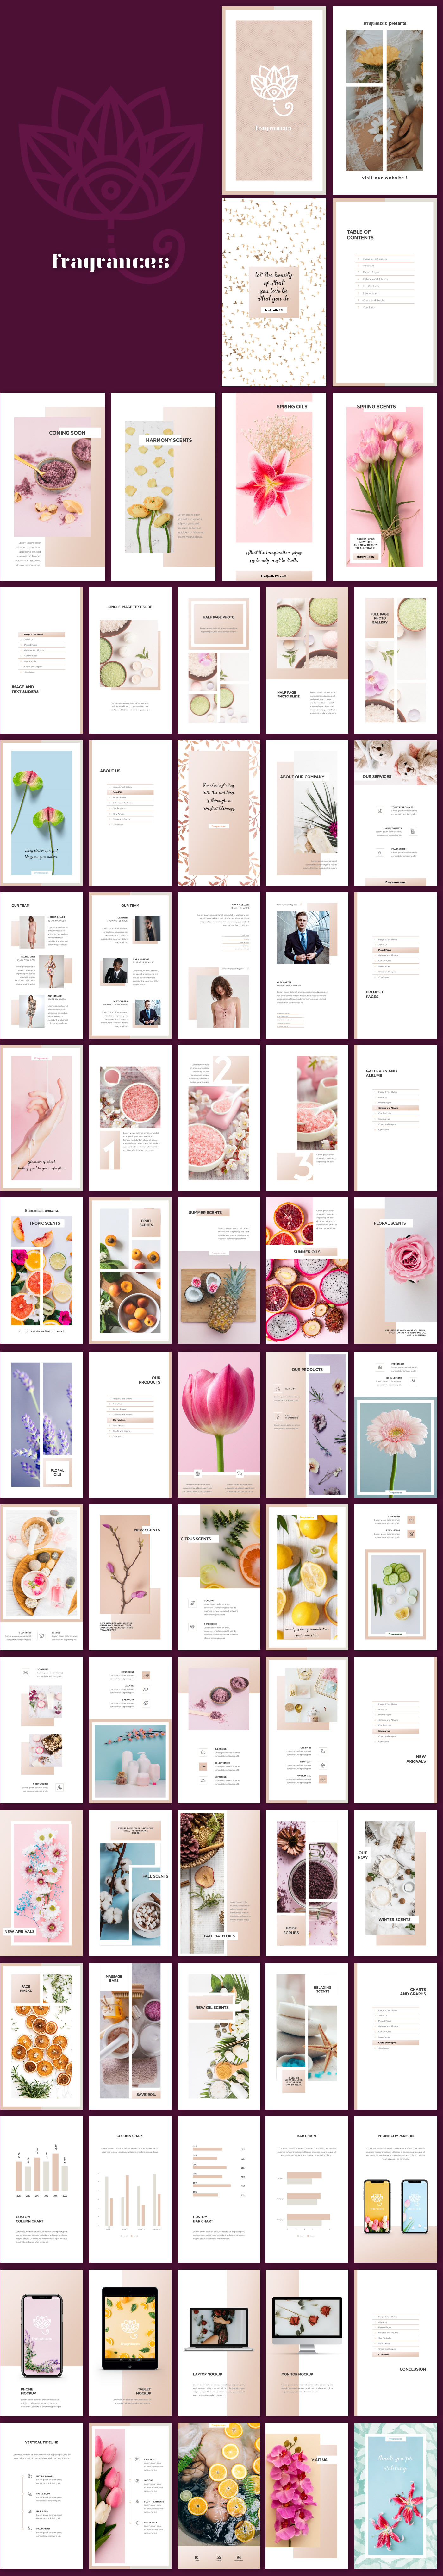 Powerpoint presentation vertical fragrances cosmetics beauty Flowers modern pastel colors